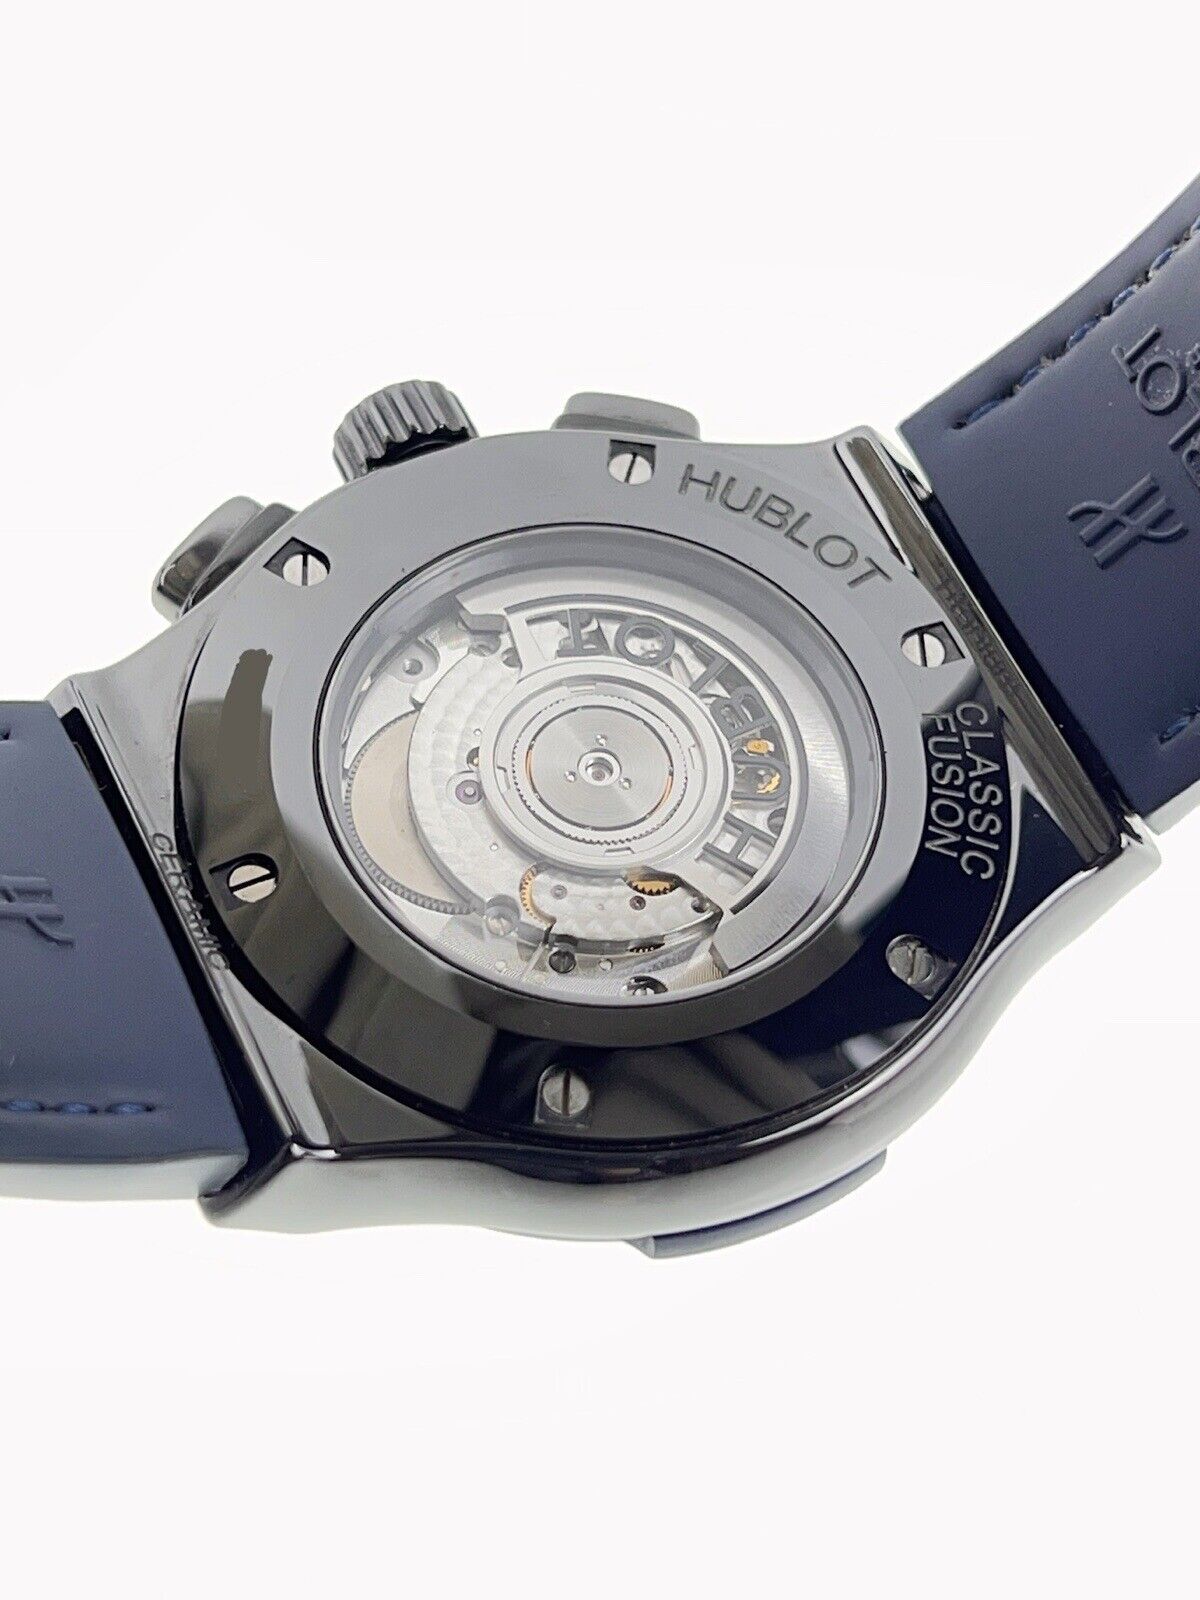 Hublot Classic Fusion Ceramic Blue 45mm Automatic Men’s Watch 521.CM.7170.LR